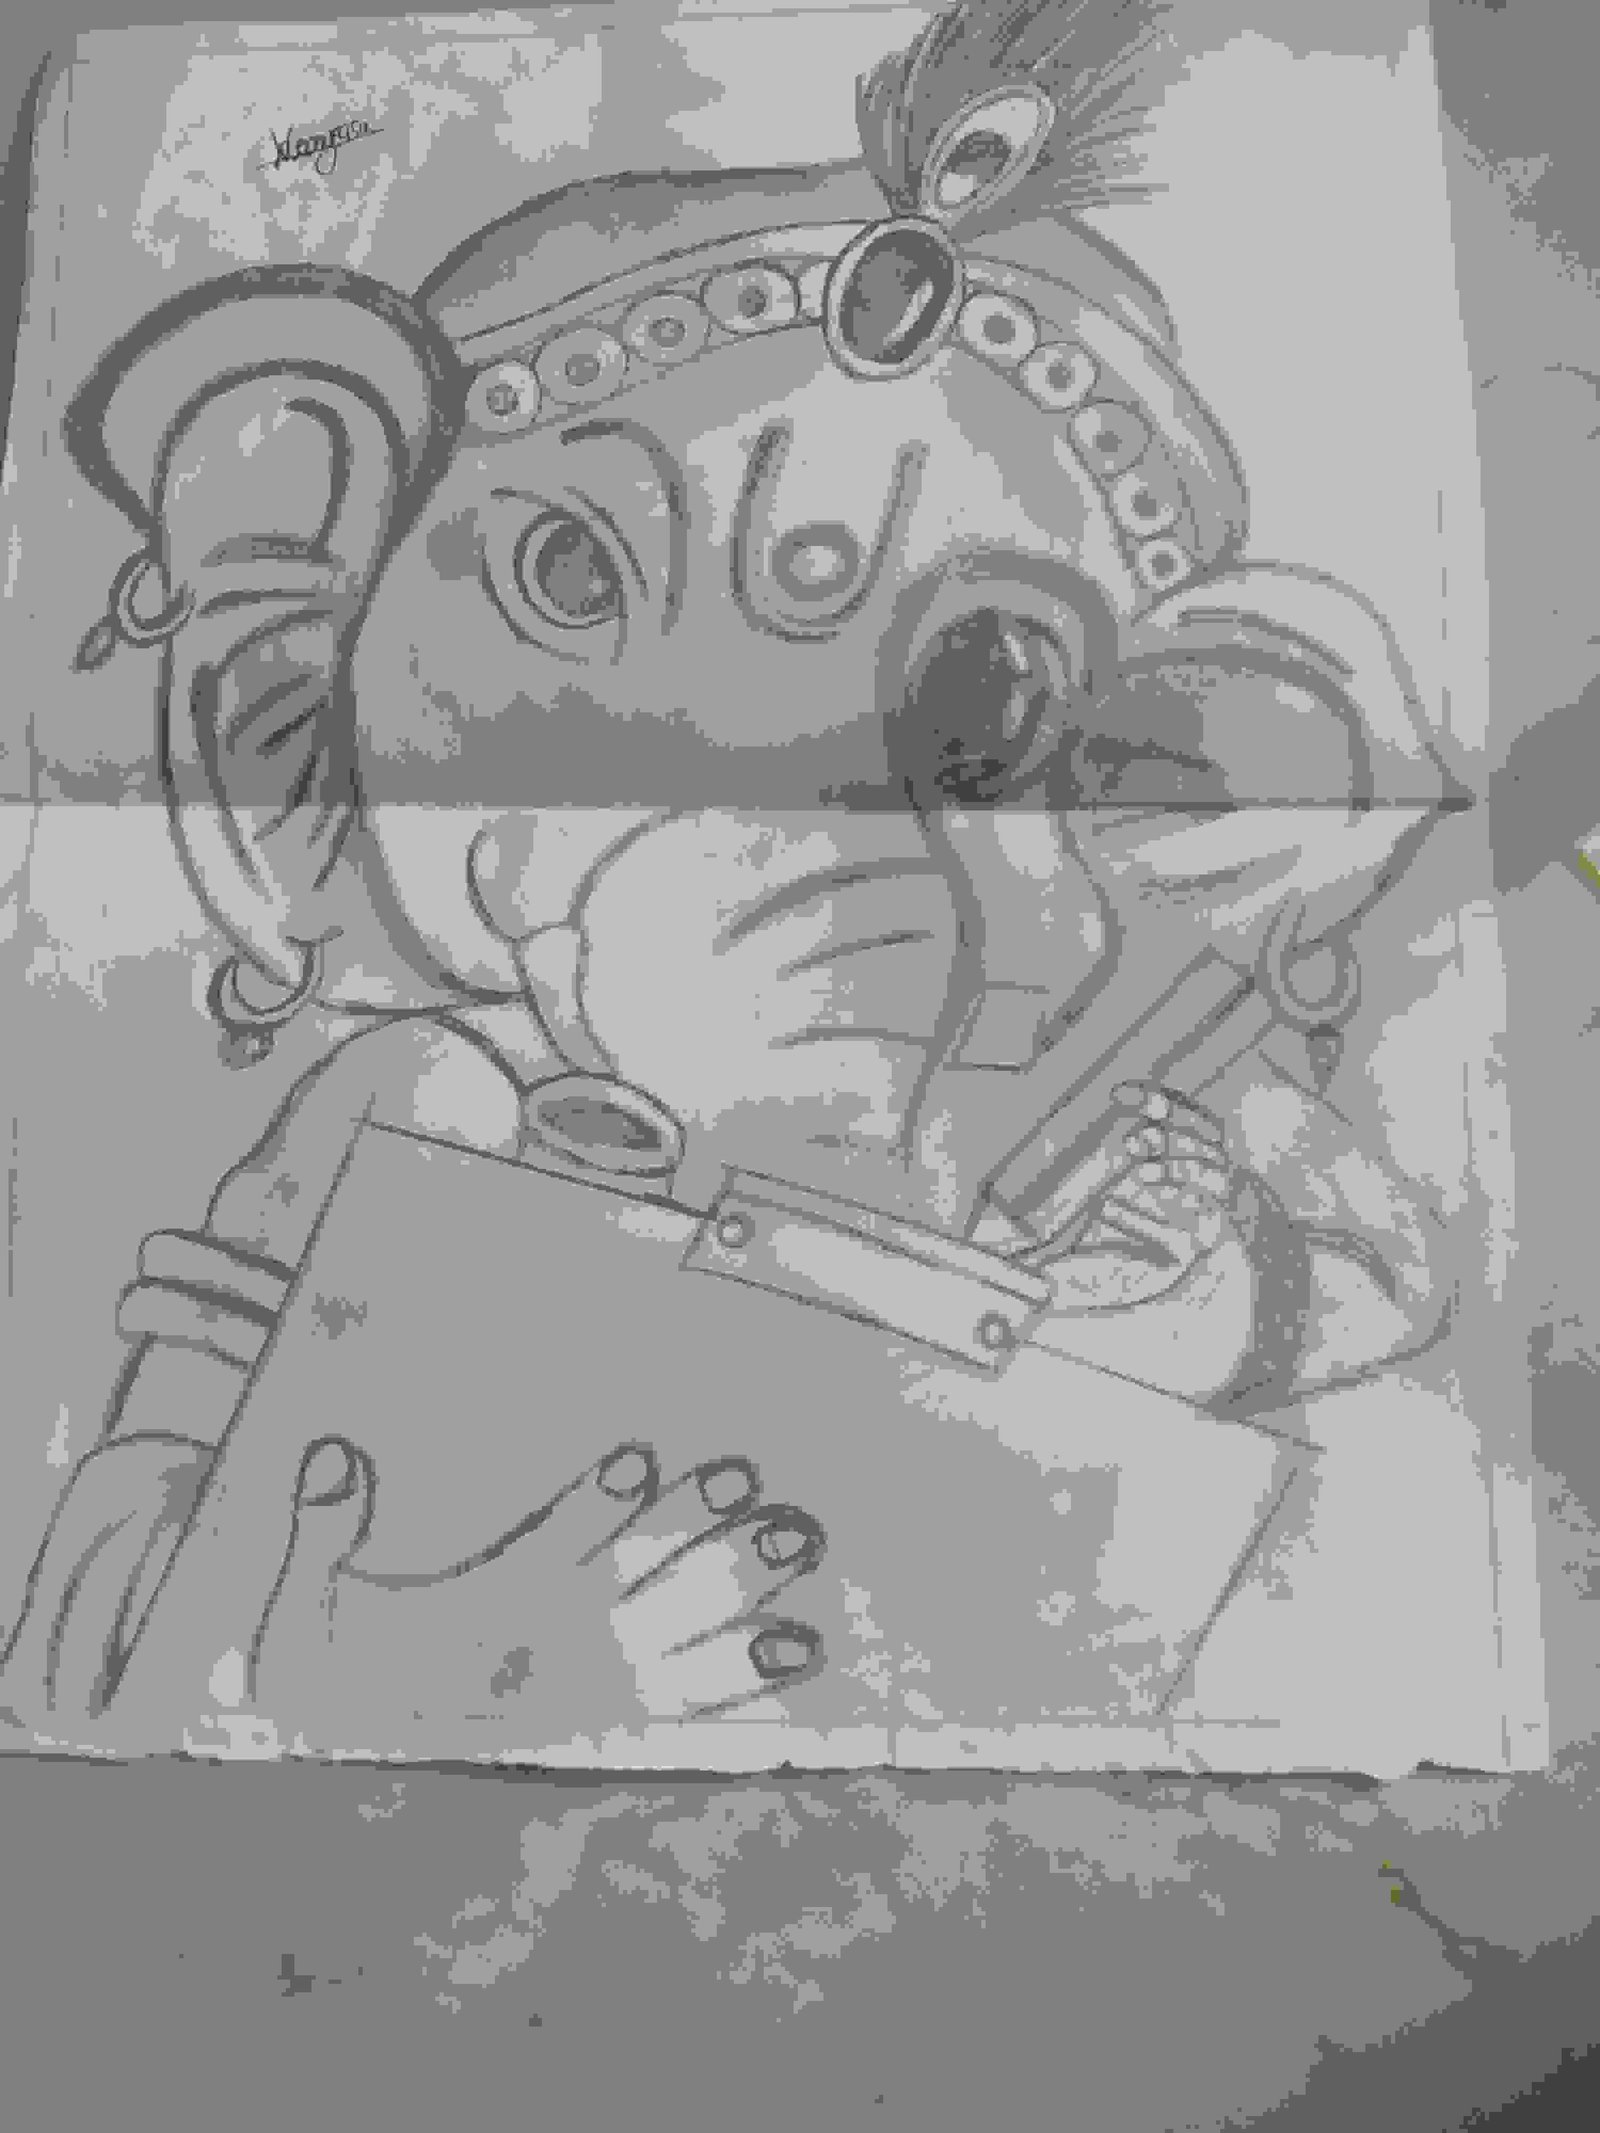 Ganesh ji drawing - Other Hobbies - 1759032806